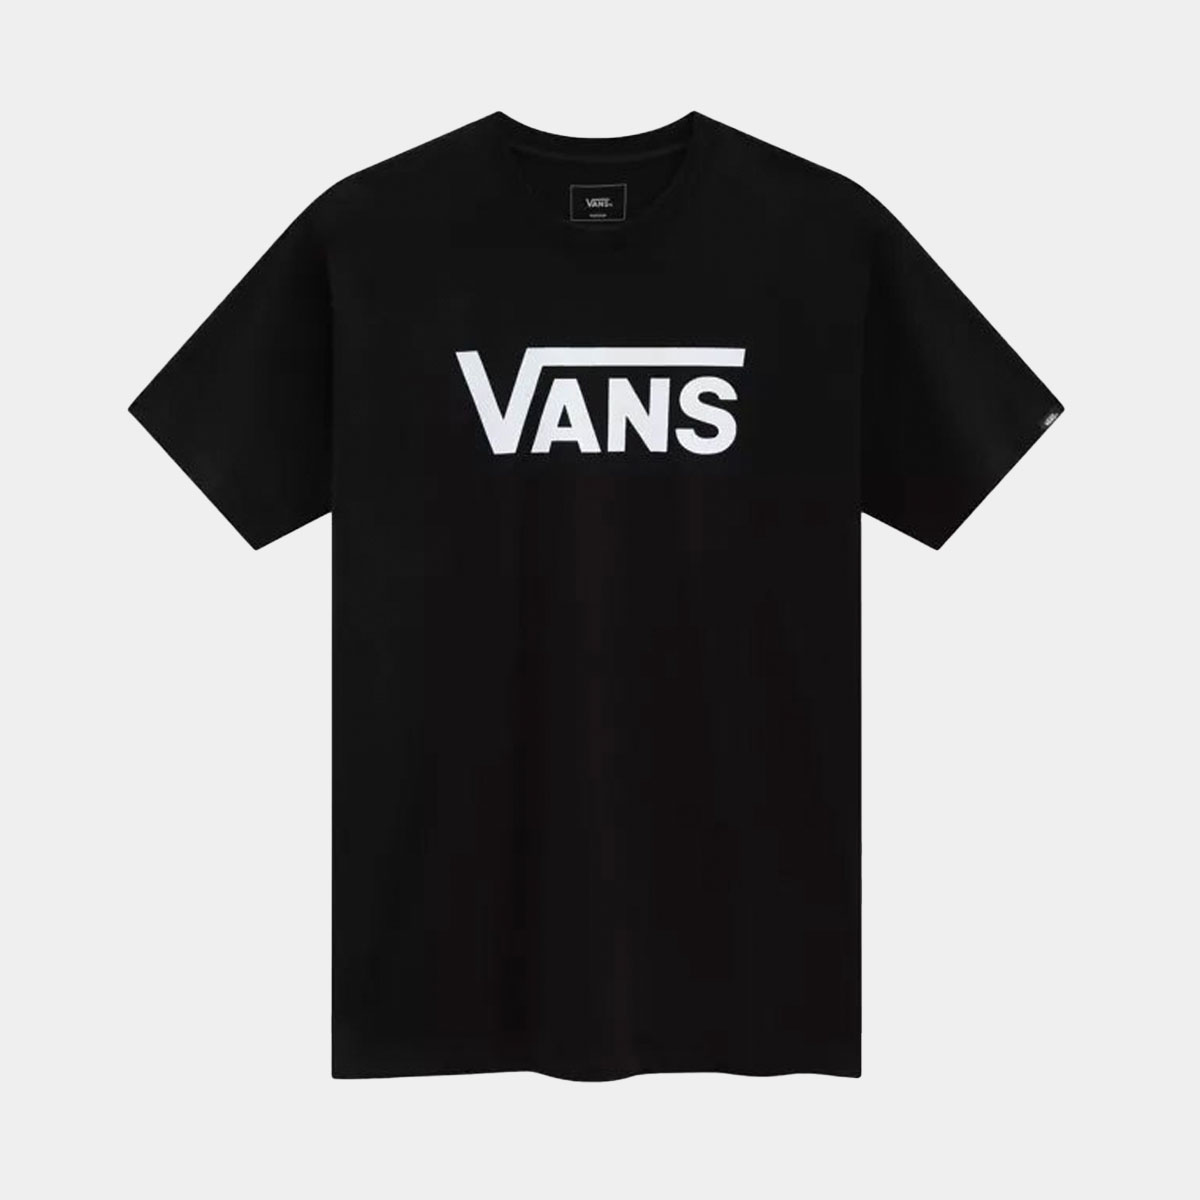 MN Vans Classic T-Shirt